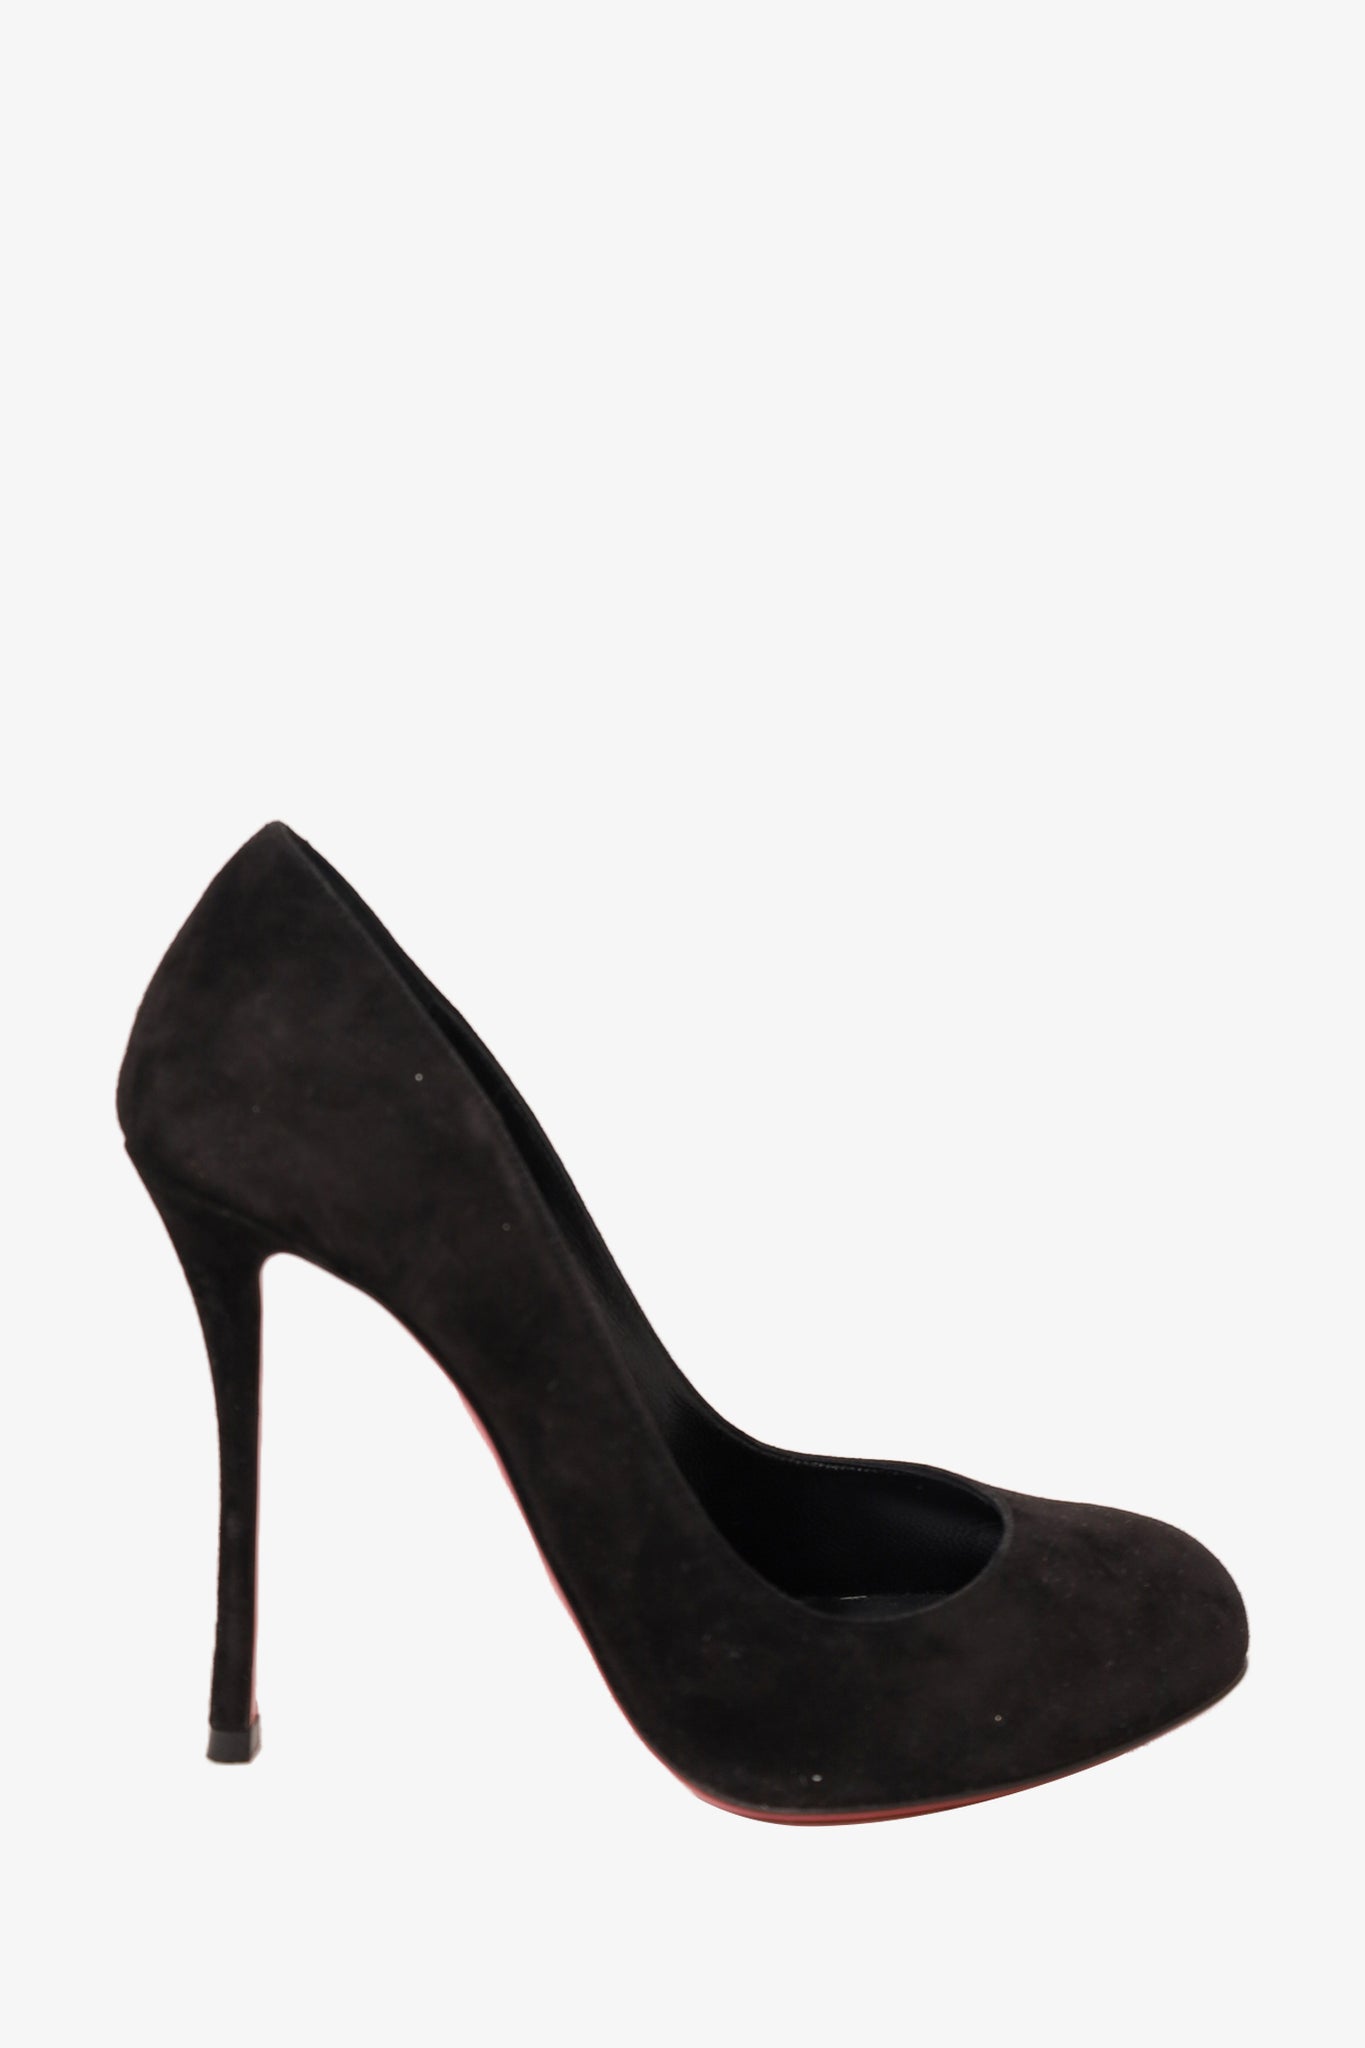 Prada Black Suede Round-Toe Pump - Kate Middleton Shoes - Kate's Closet